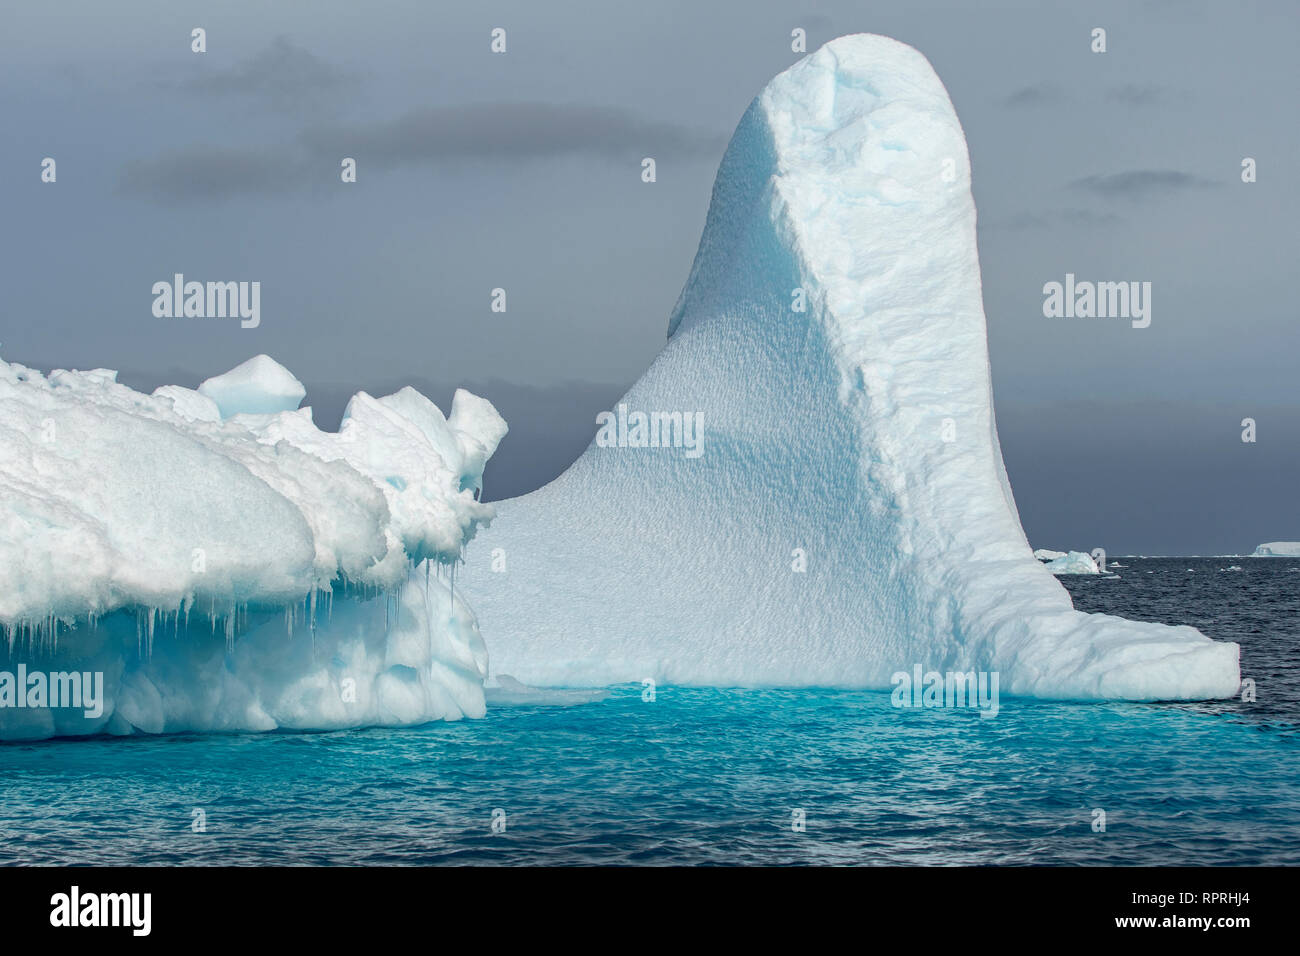 Sculptured Iceberg in Active Sound Stock Photo